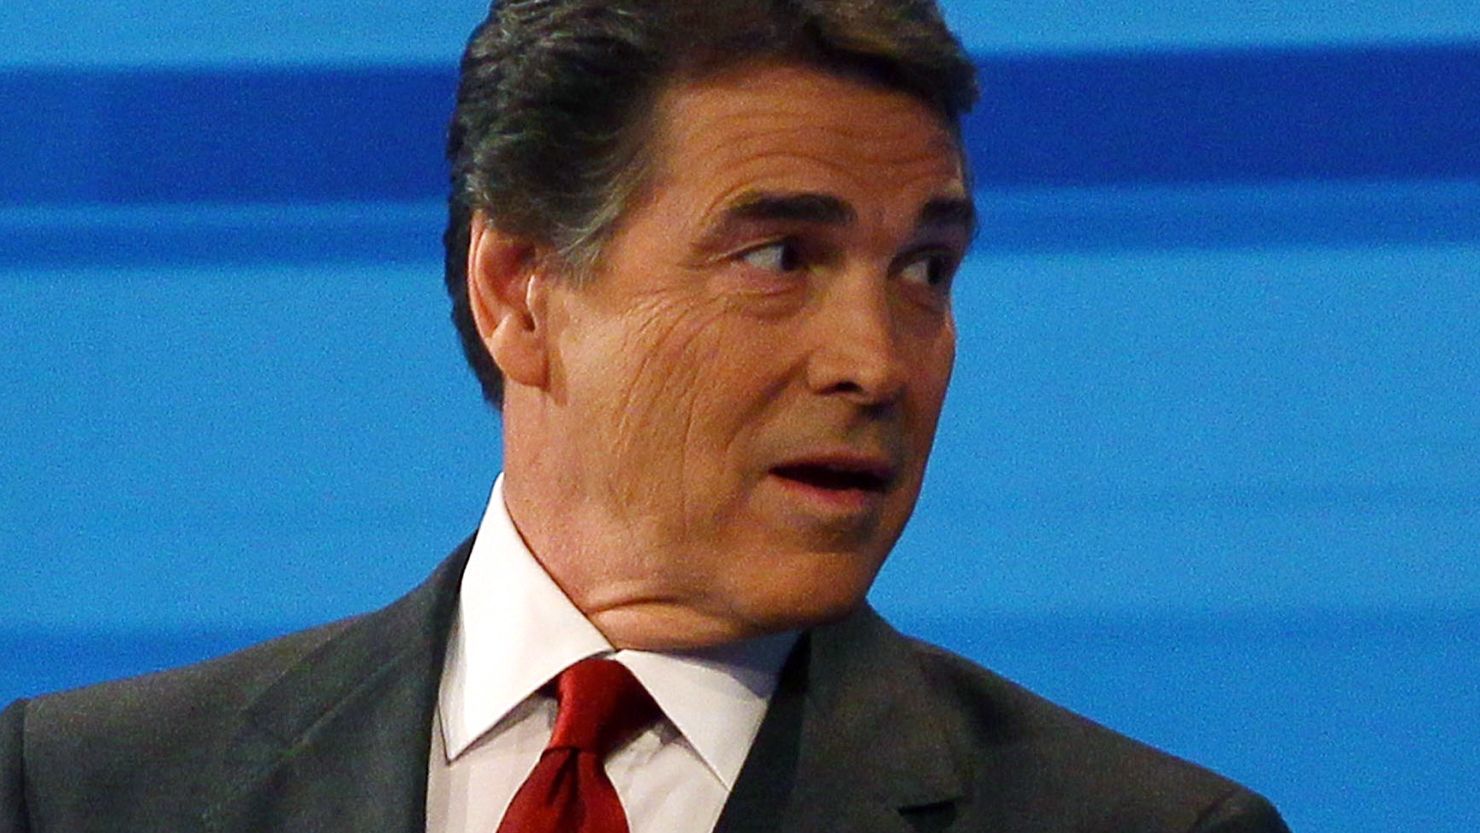 Gov. Rick Perry participates in a Republican presidential debate in Orlando, Florida.